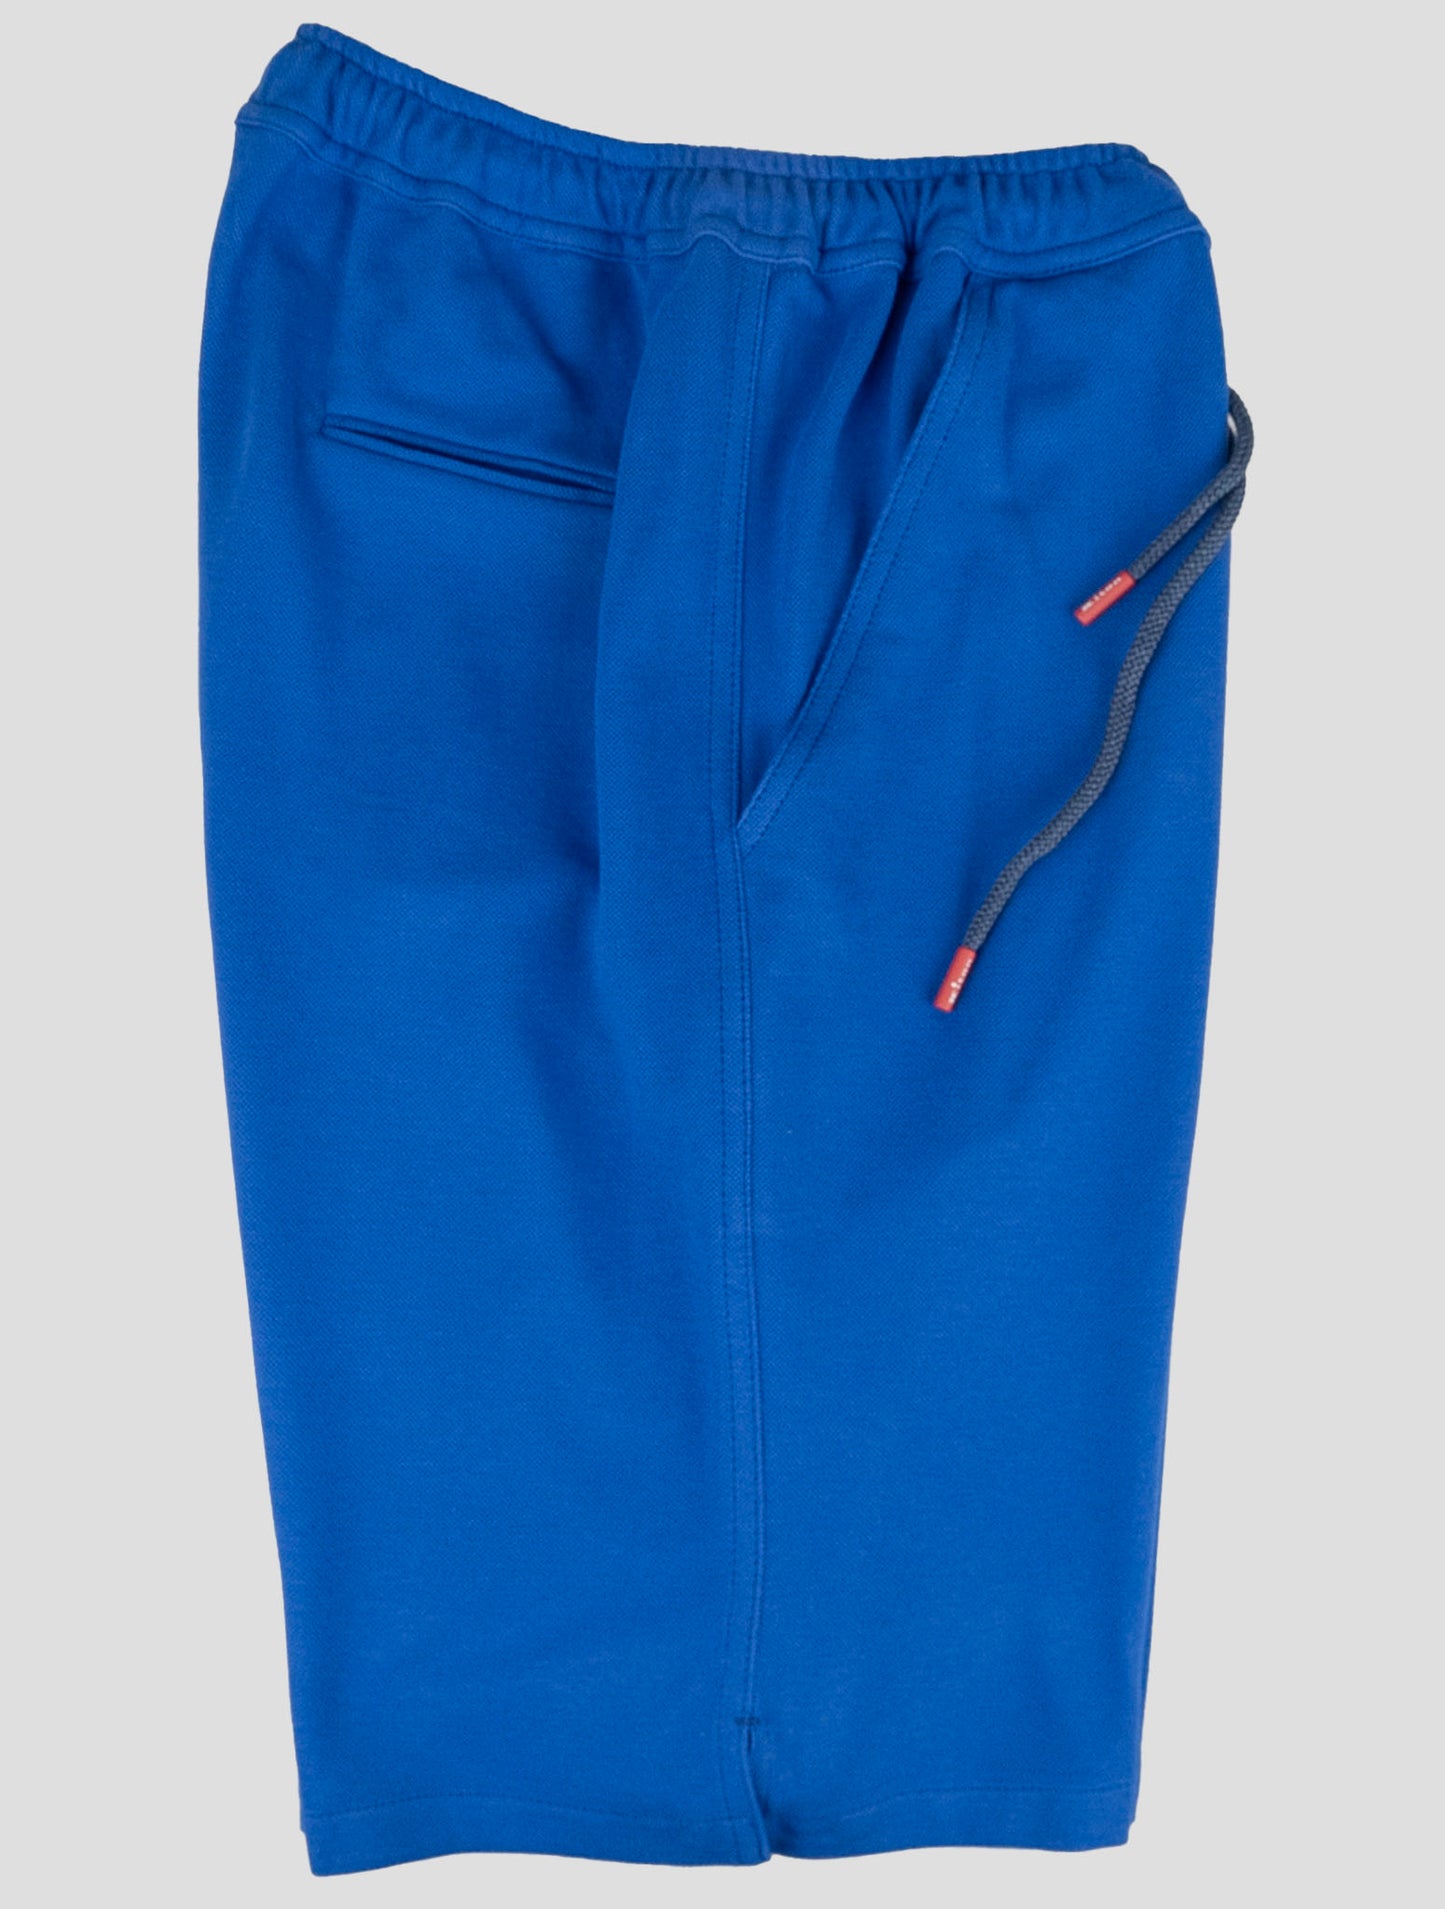 Kiton Matching Outfit - Grey Mariano and Blue Short Pants Tracksuit